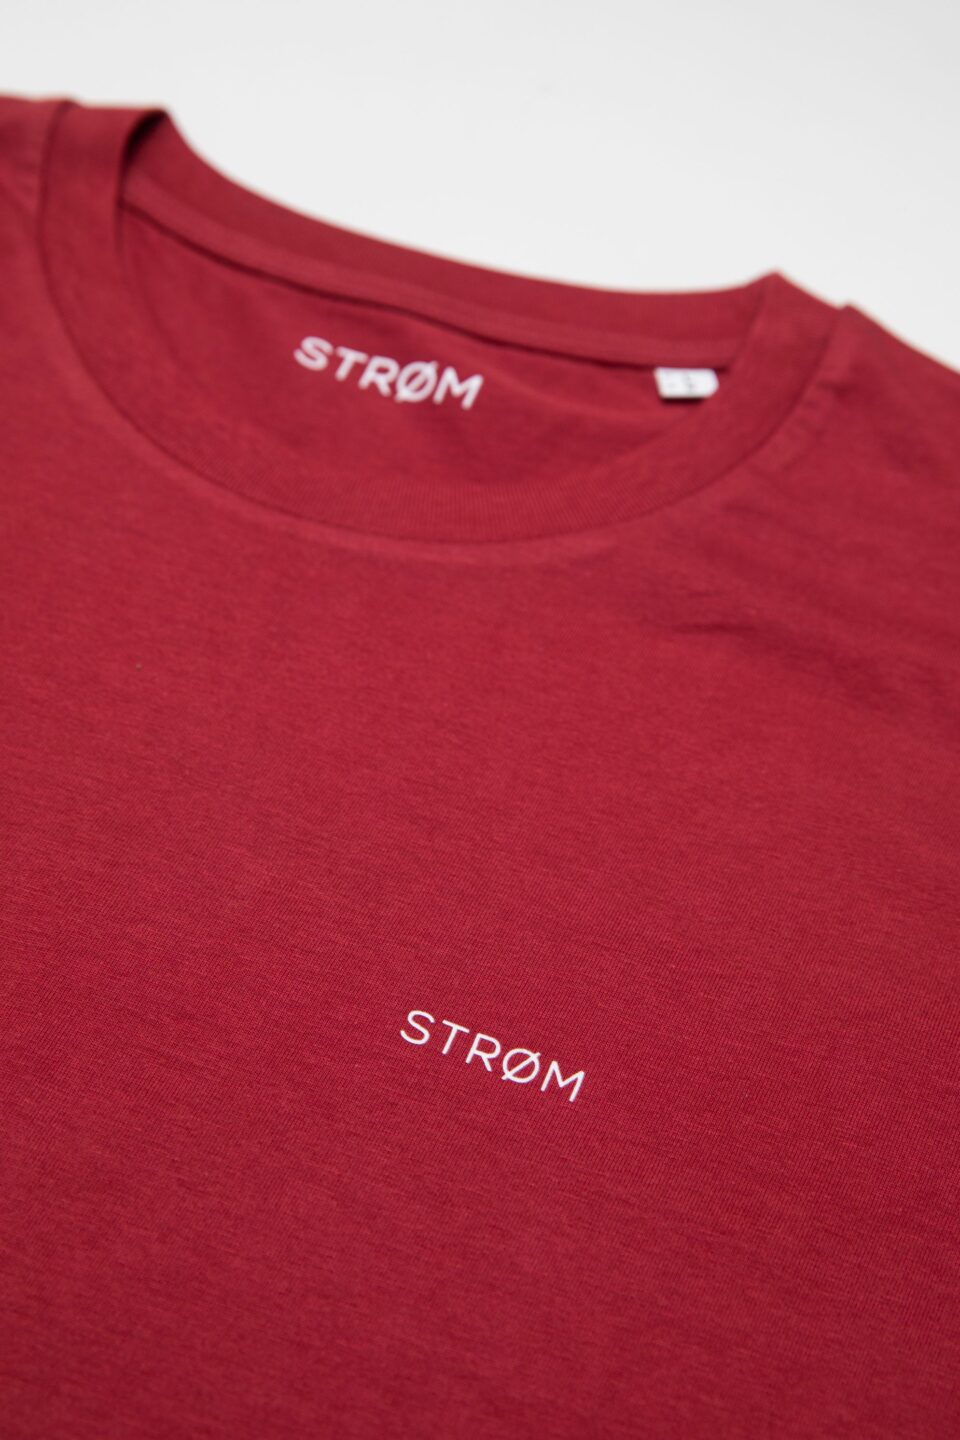 rythmic-red_strom_shirt